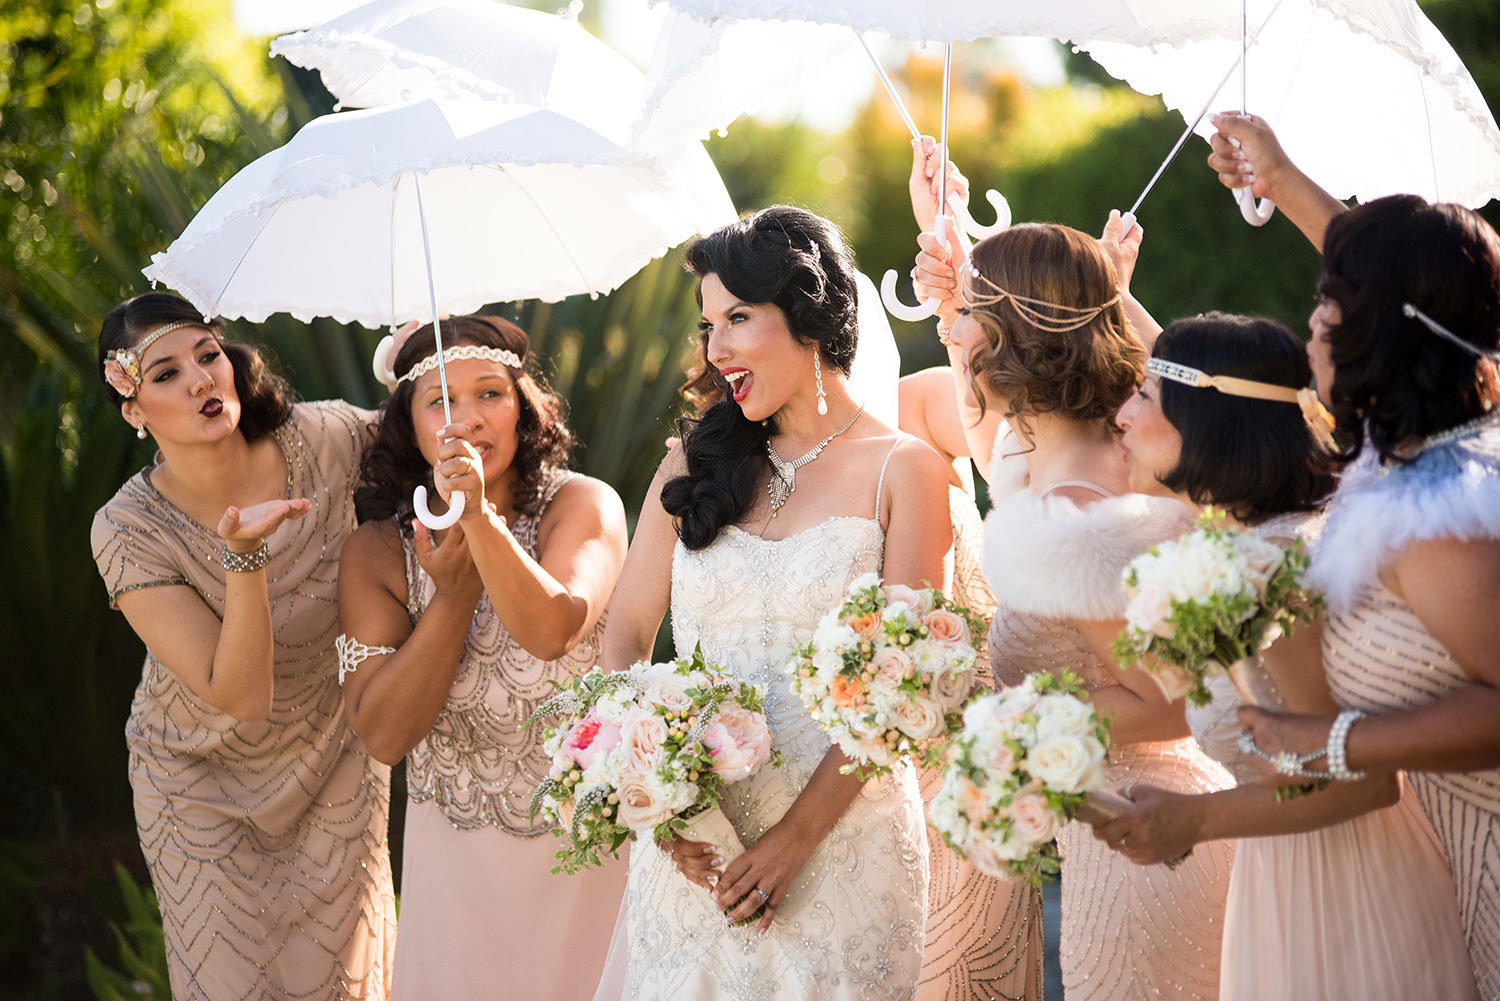 Creative bridesmaids portrait with parasols